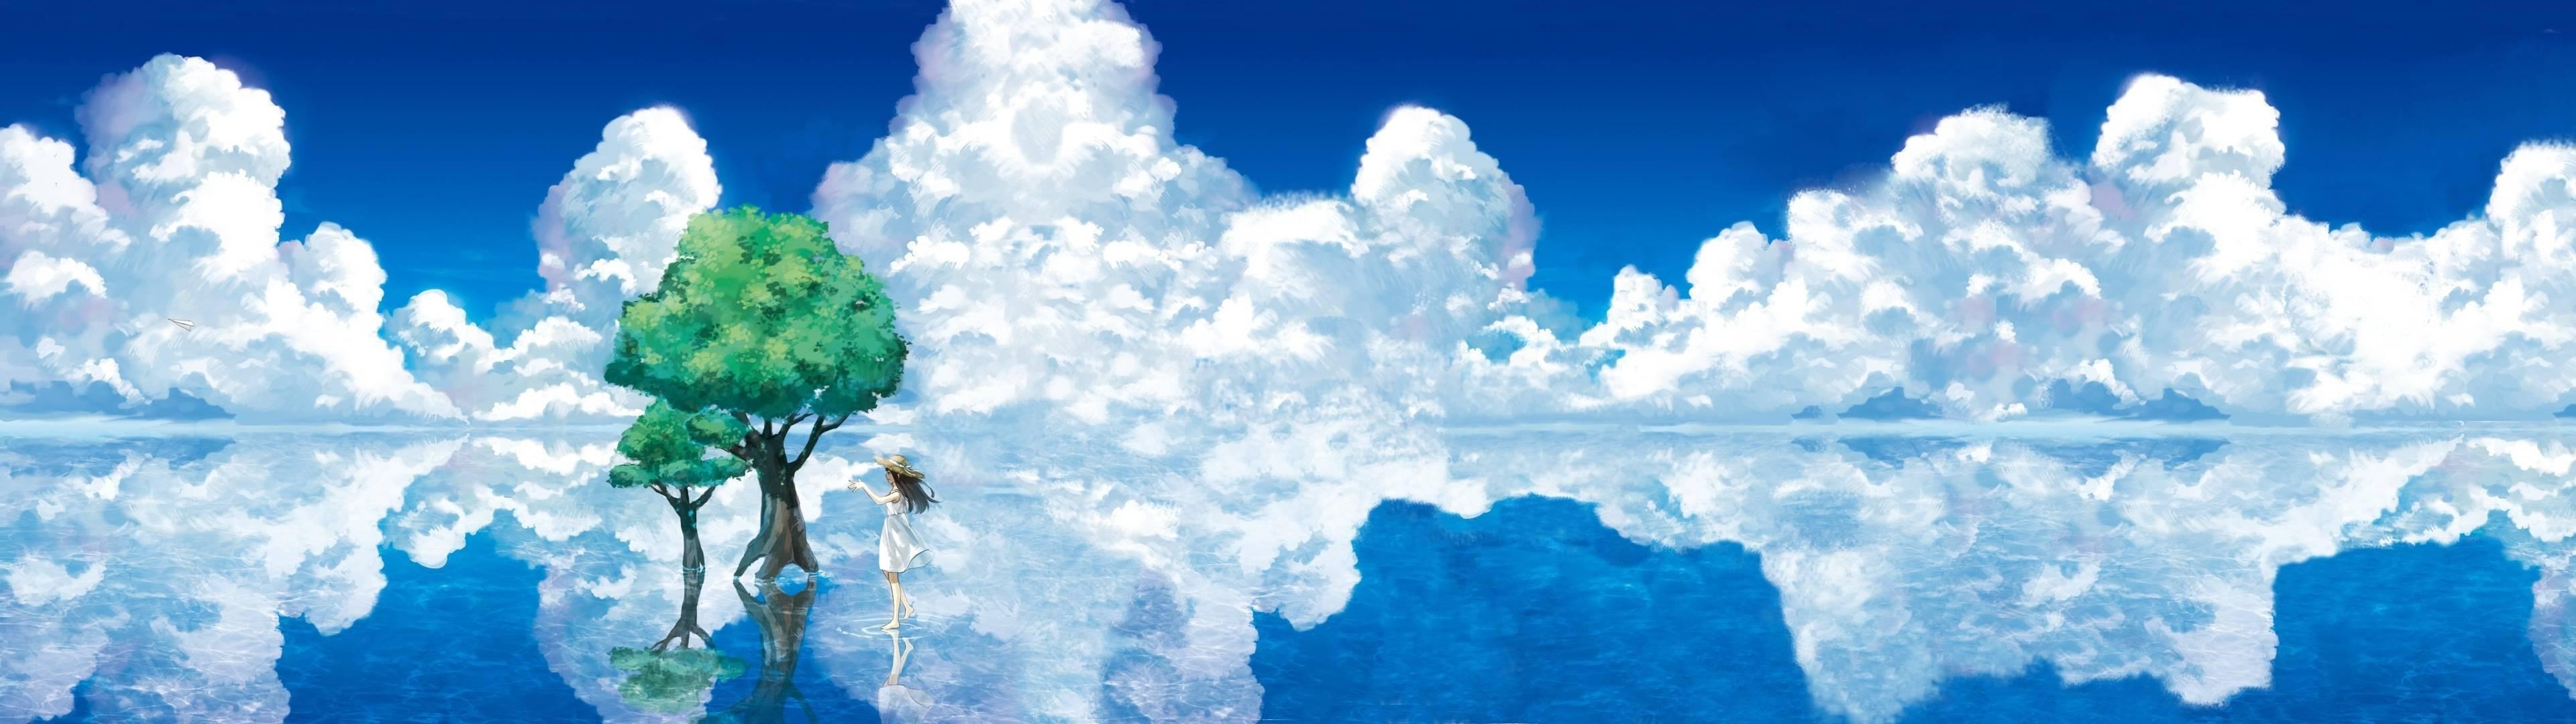 3840x1080 anime landscape dual screen wallpaper 